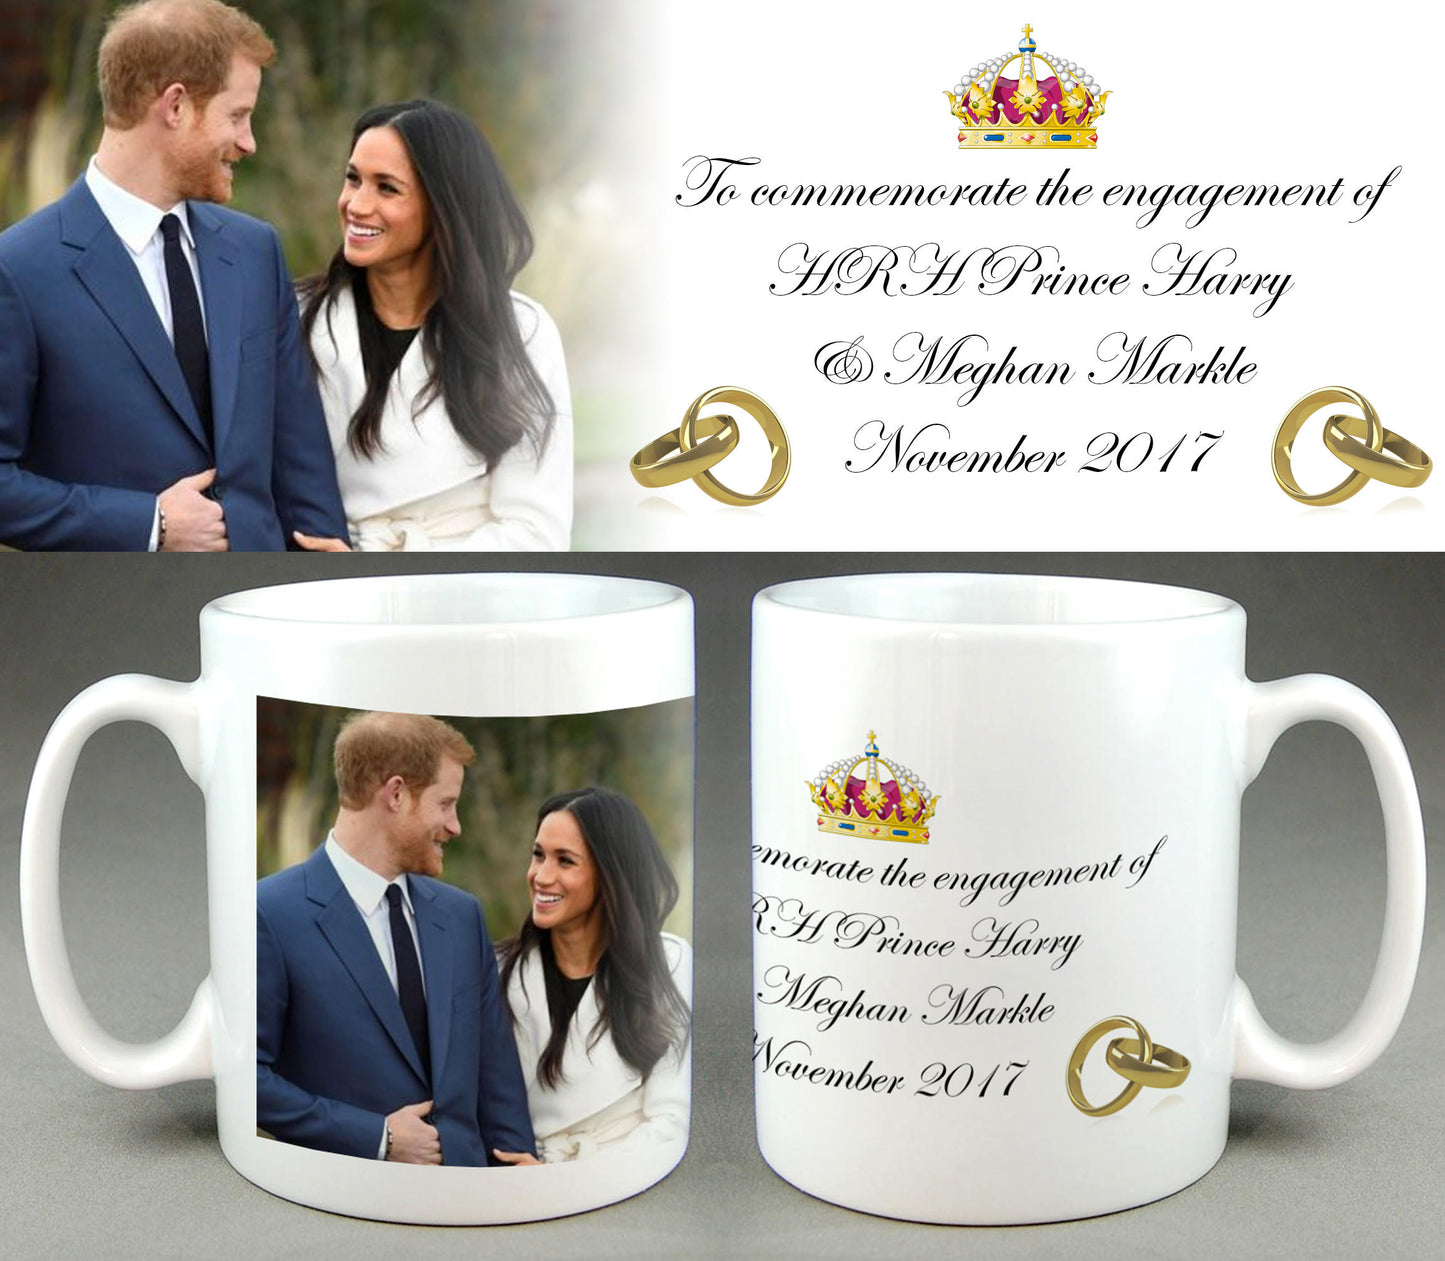 Prince Harry & Meghan Markle - Commemorative Royal Engagement Mug #3 10oz Ceramic Cup